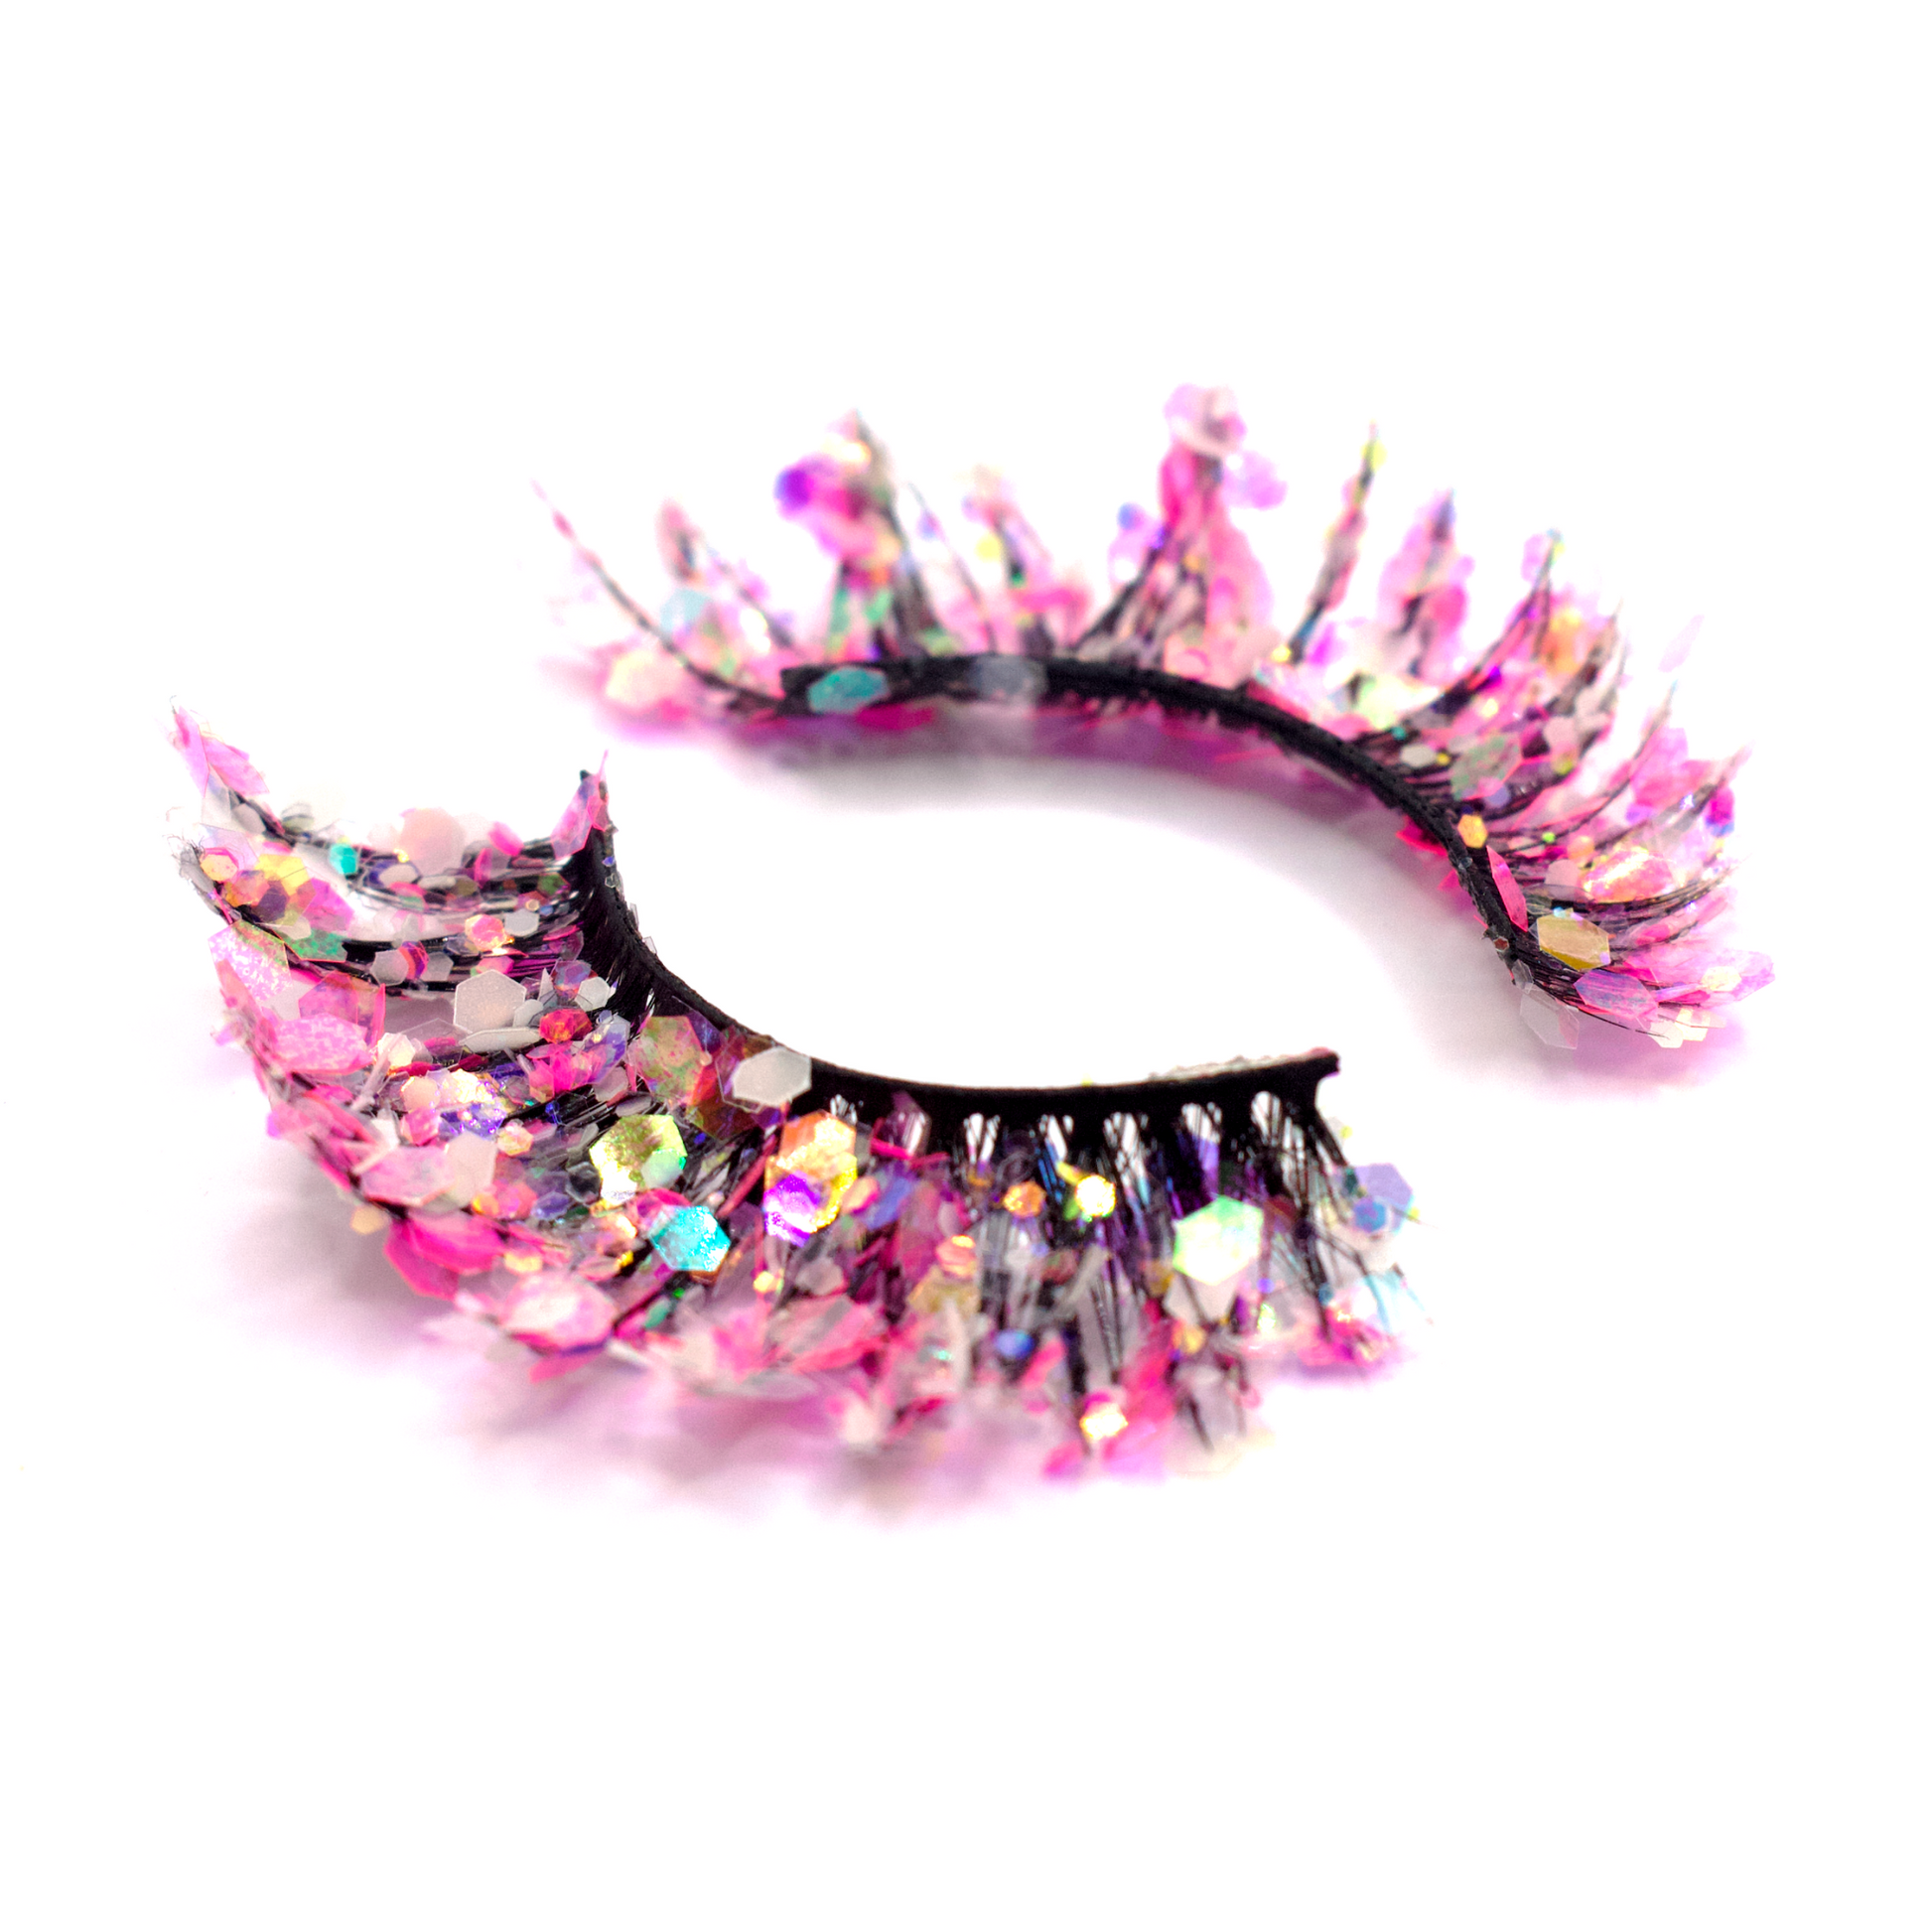 UV Blacklight reactive Miss Dolly glitter lashes close up